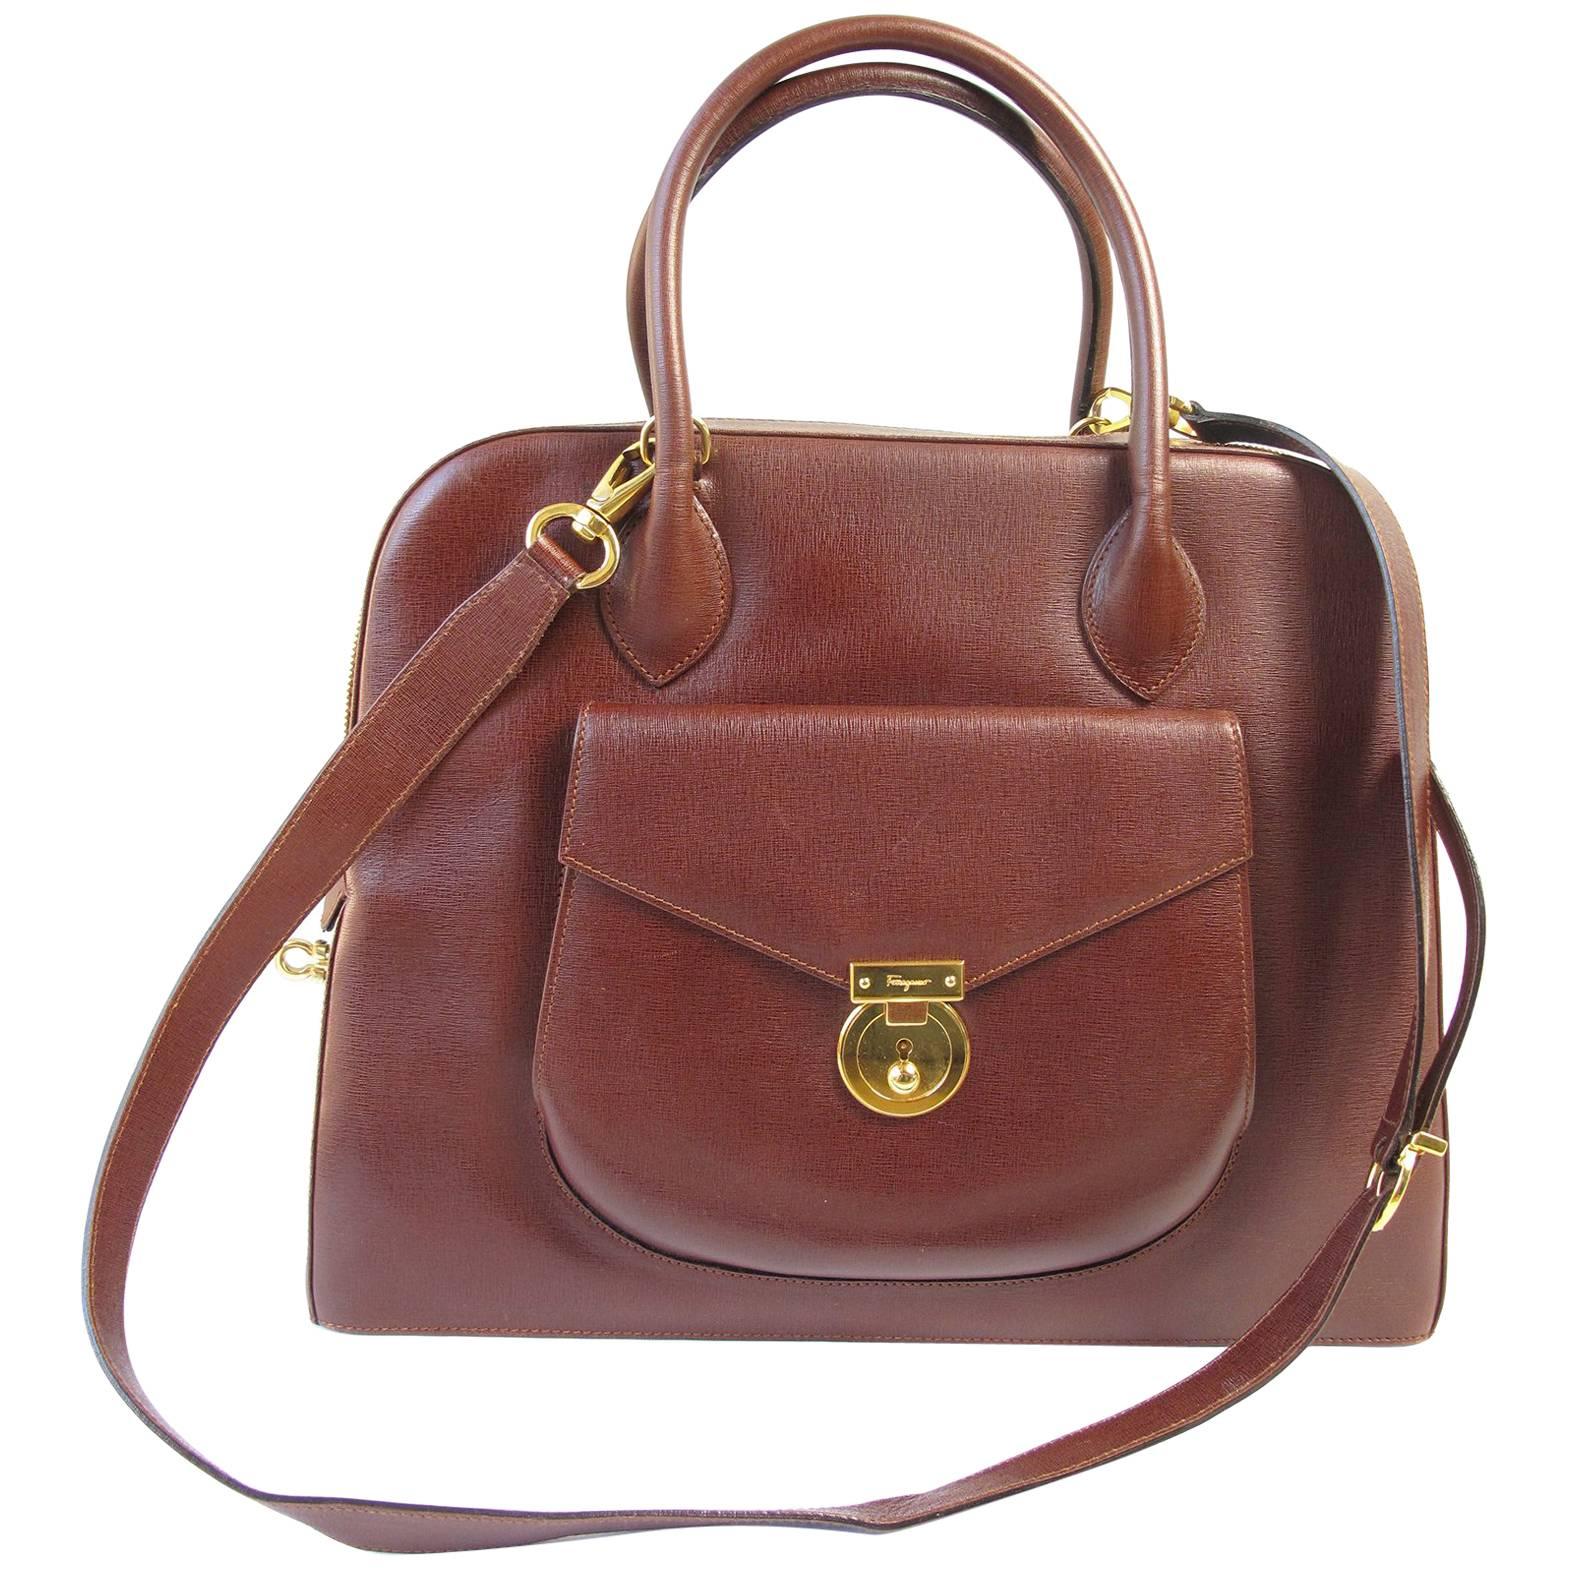 Ferragamo Brown Leather Structured Bag 